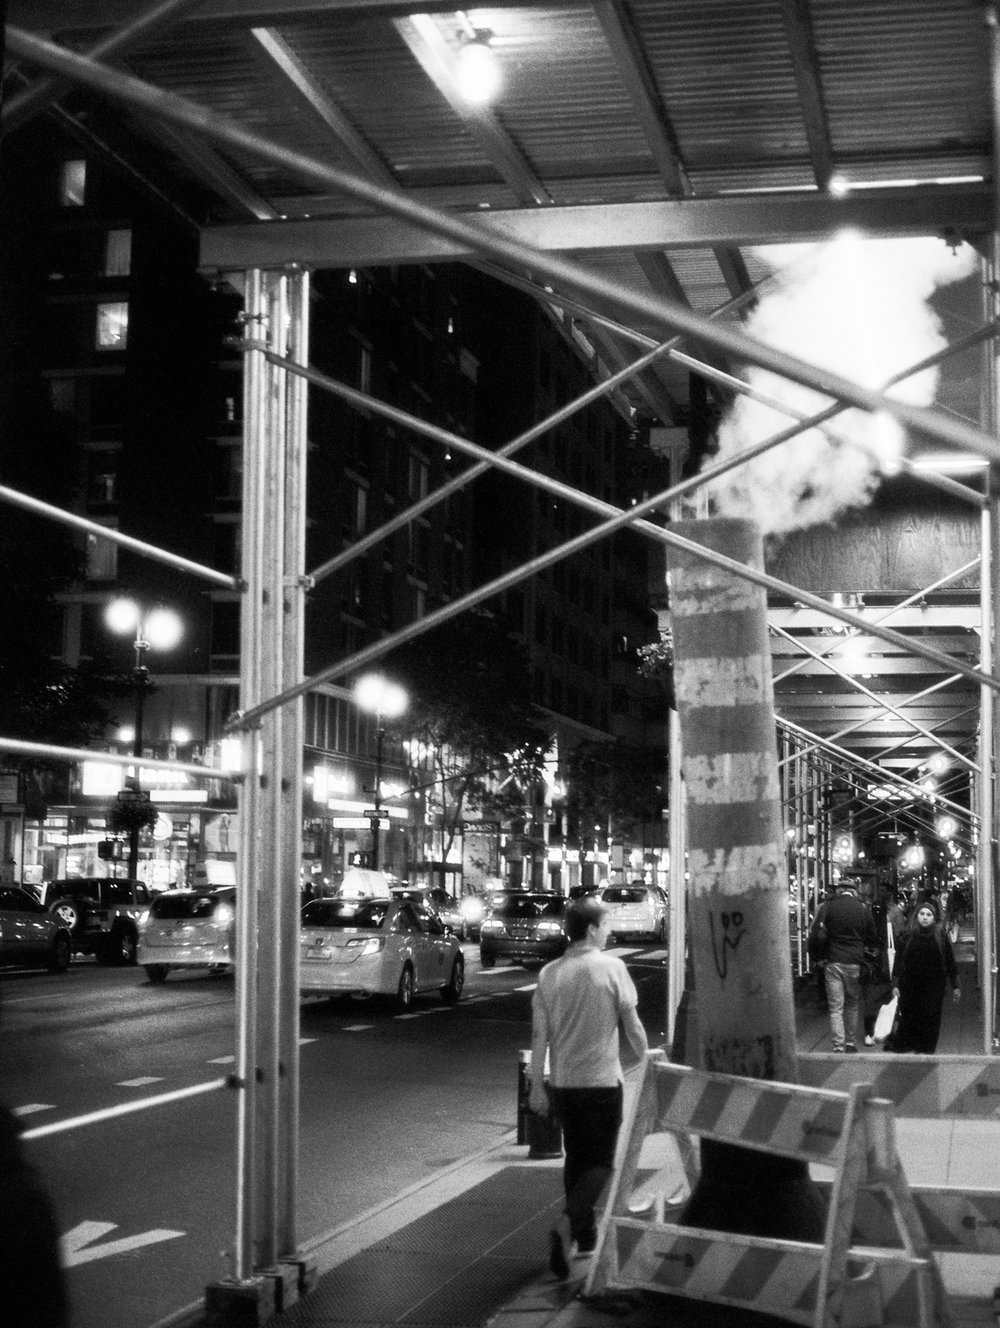  New York City street photography at night&nbsp; 